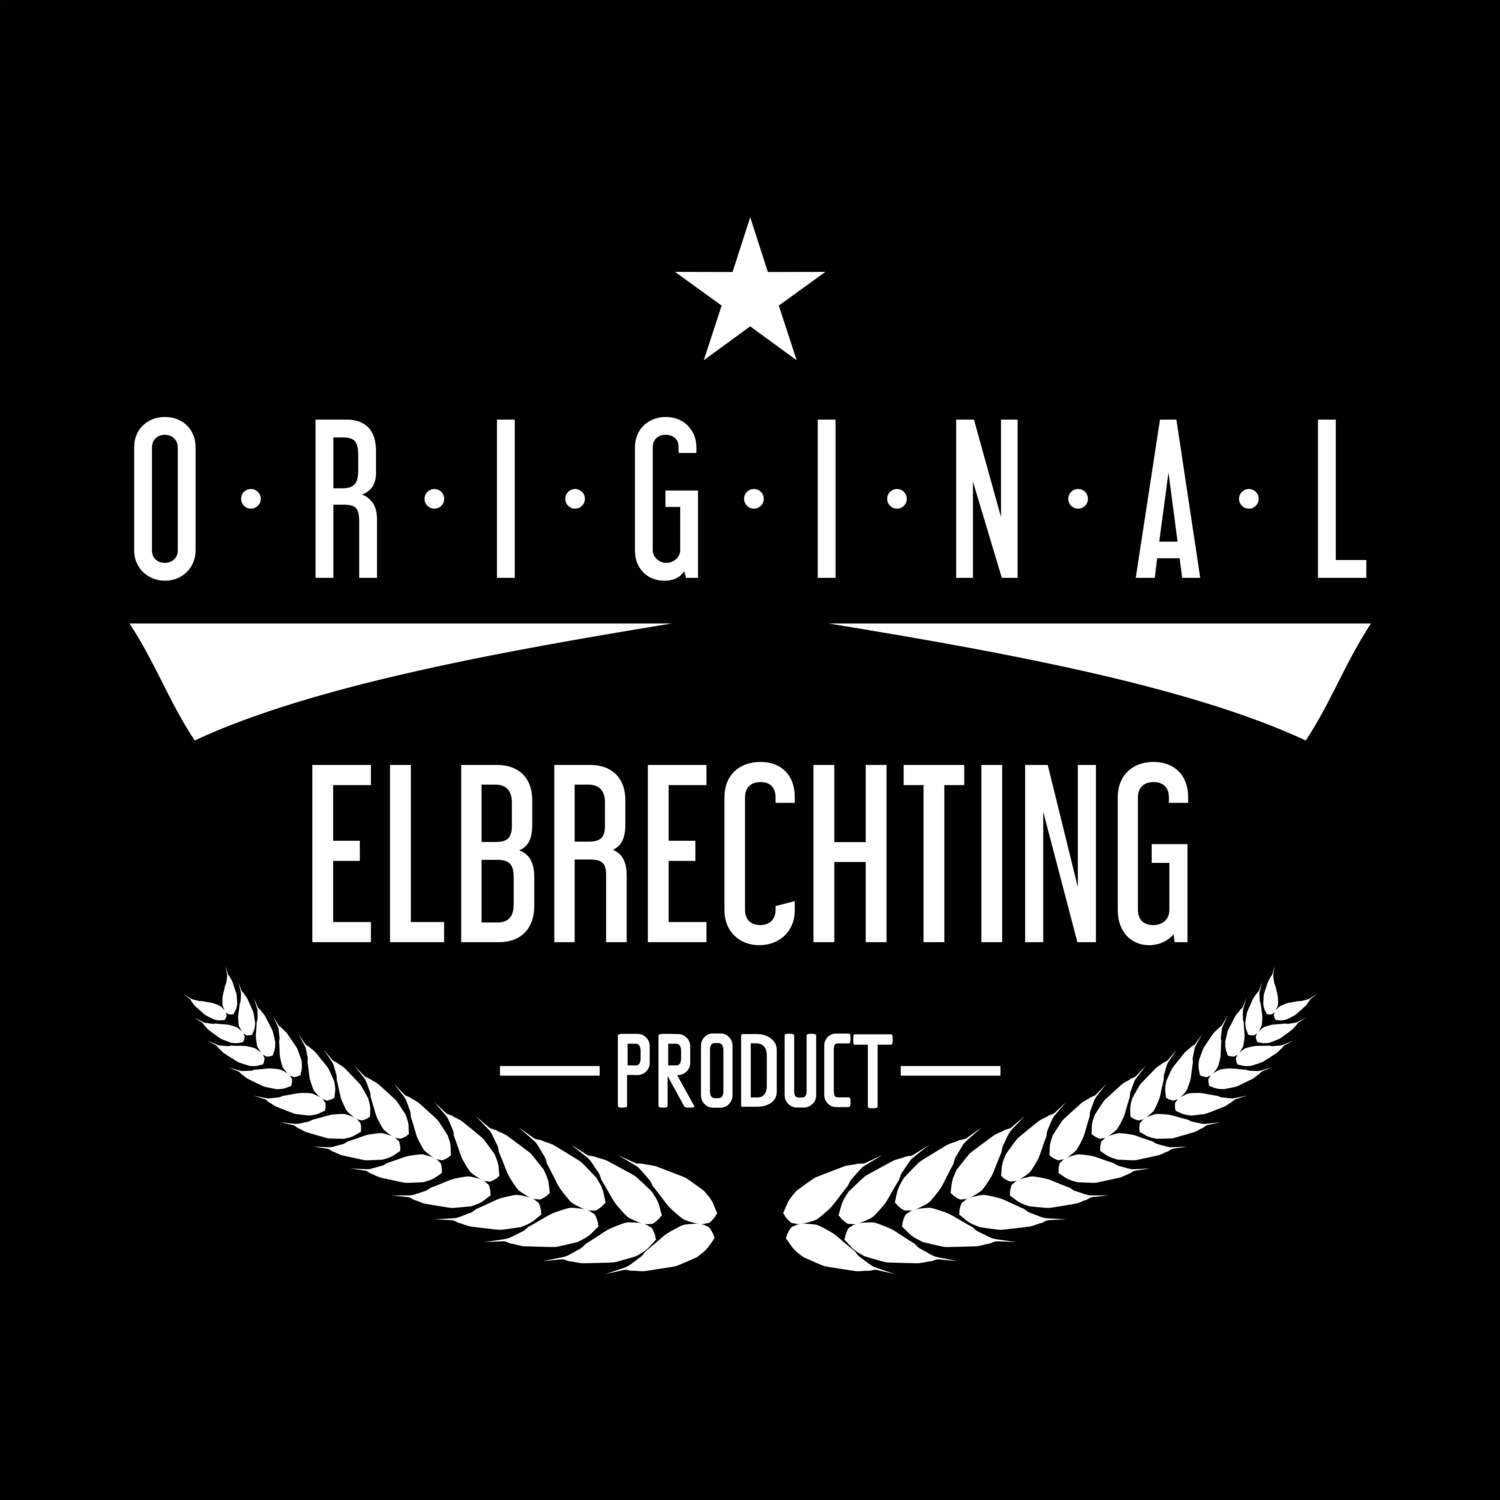 Elbrechting T-Shirt »Original Product«